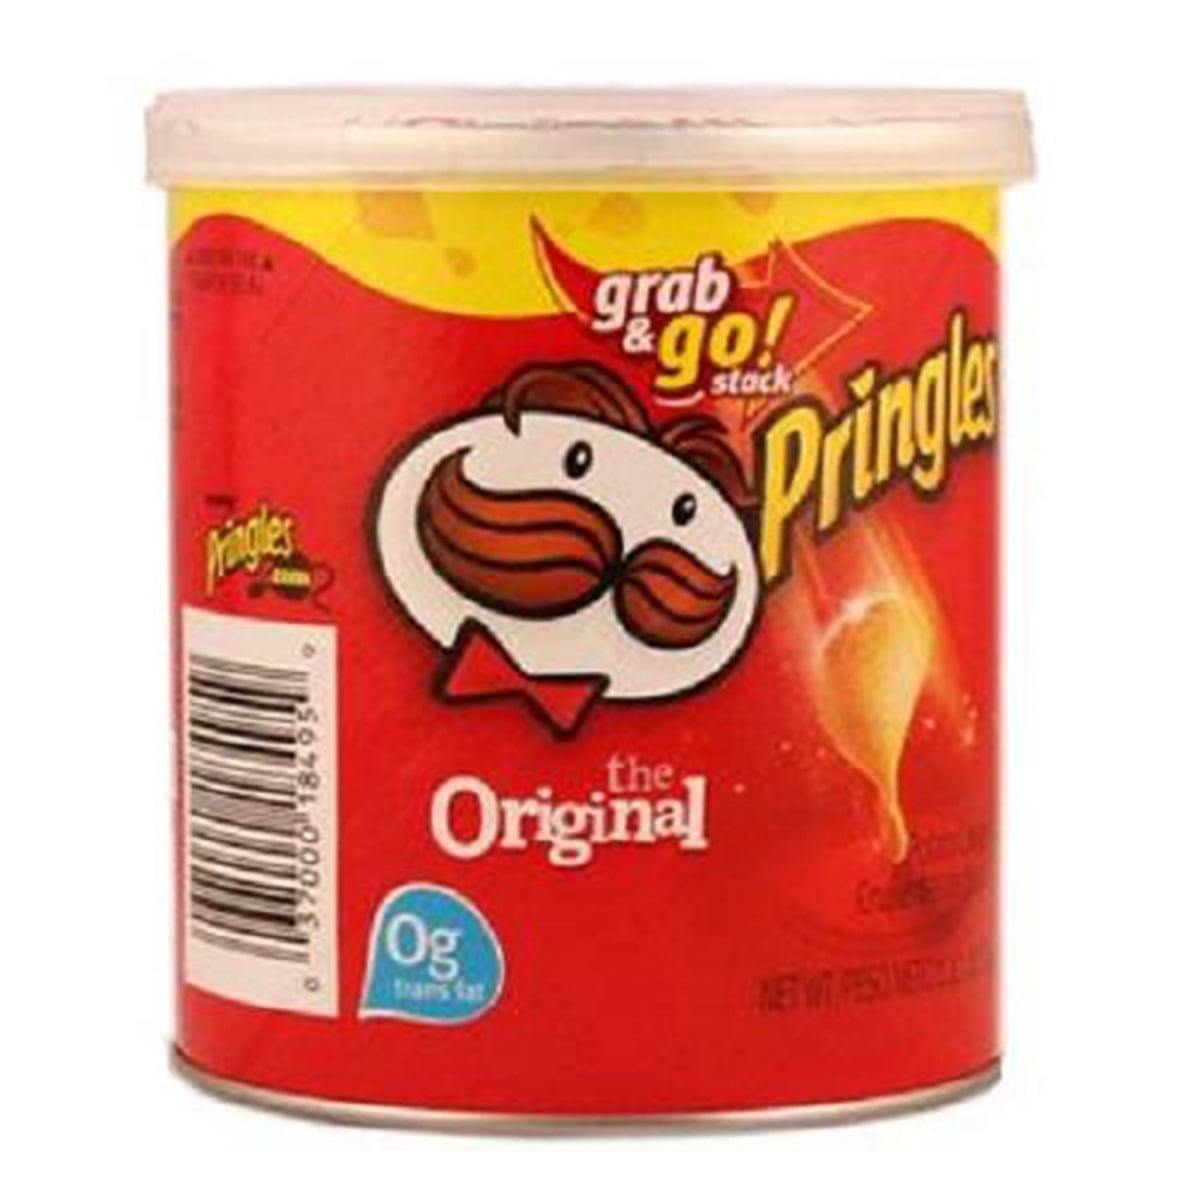 Pringles, Original - Small, Count 1 - Chips / Grab Varieties & Flavors ...